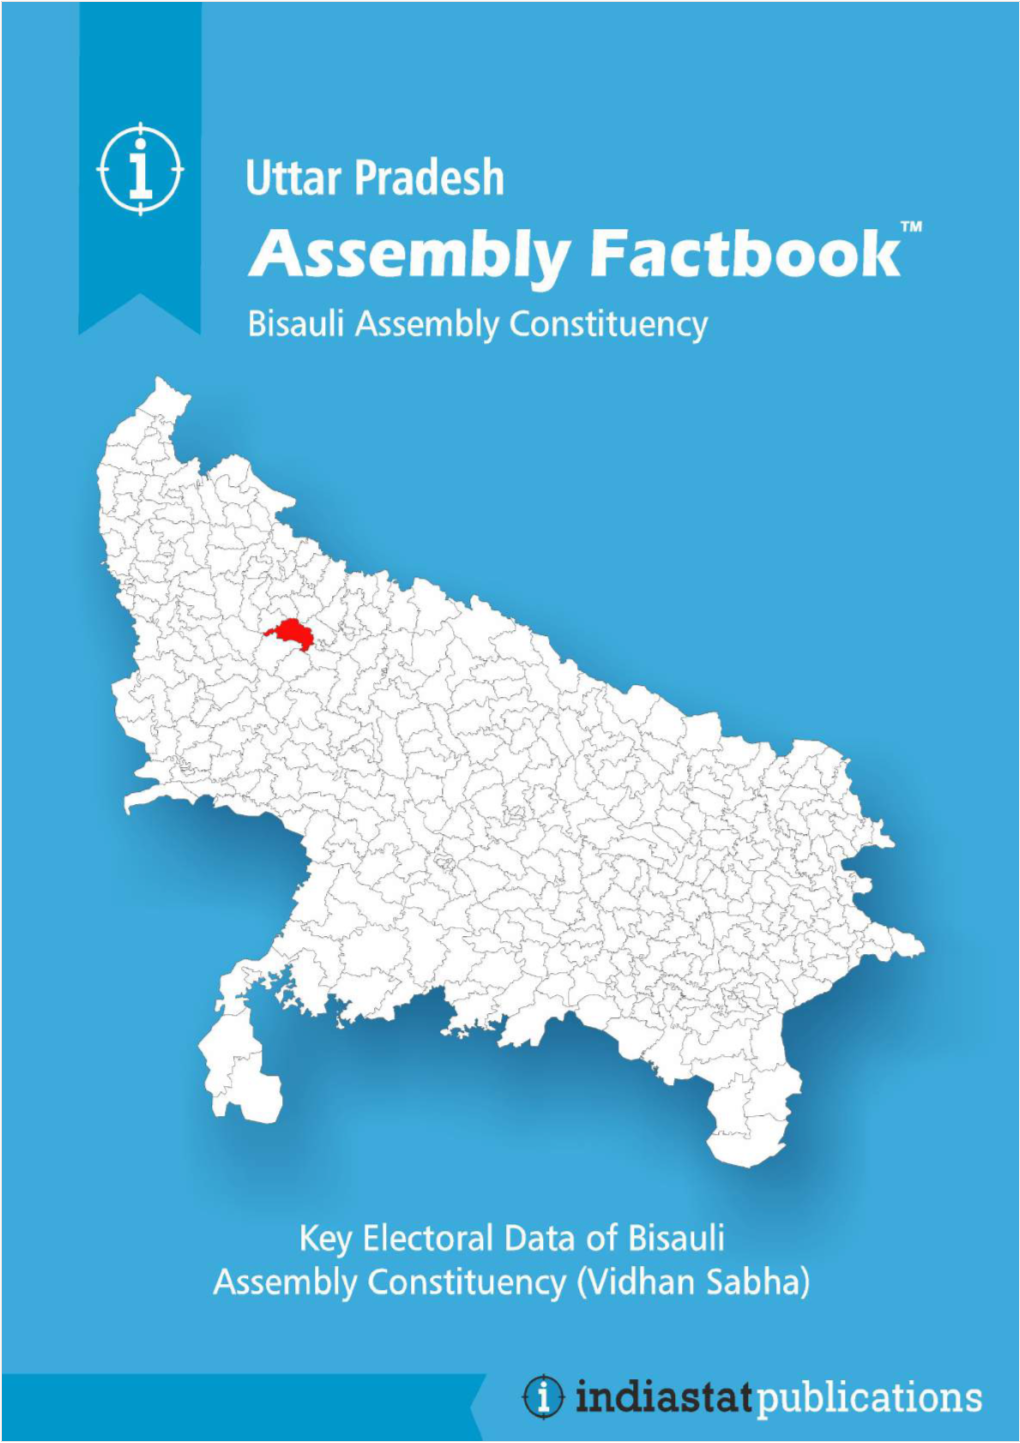 Bisauli Assembly Uttar Pradesh Factbook